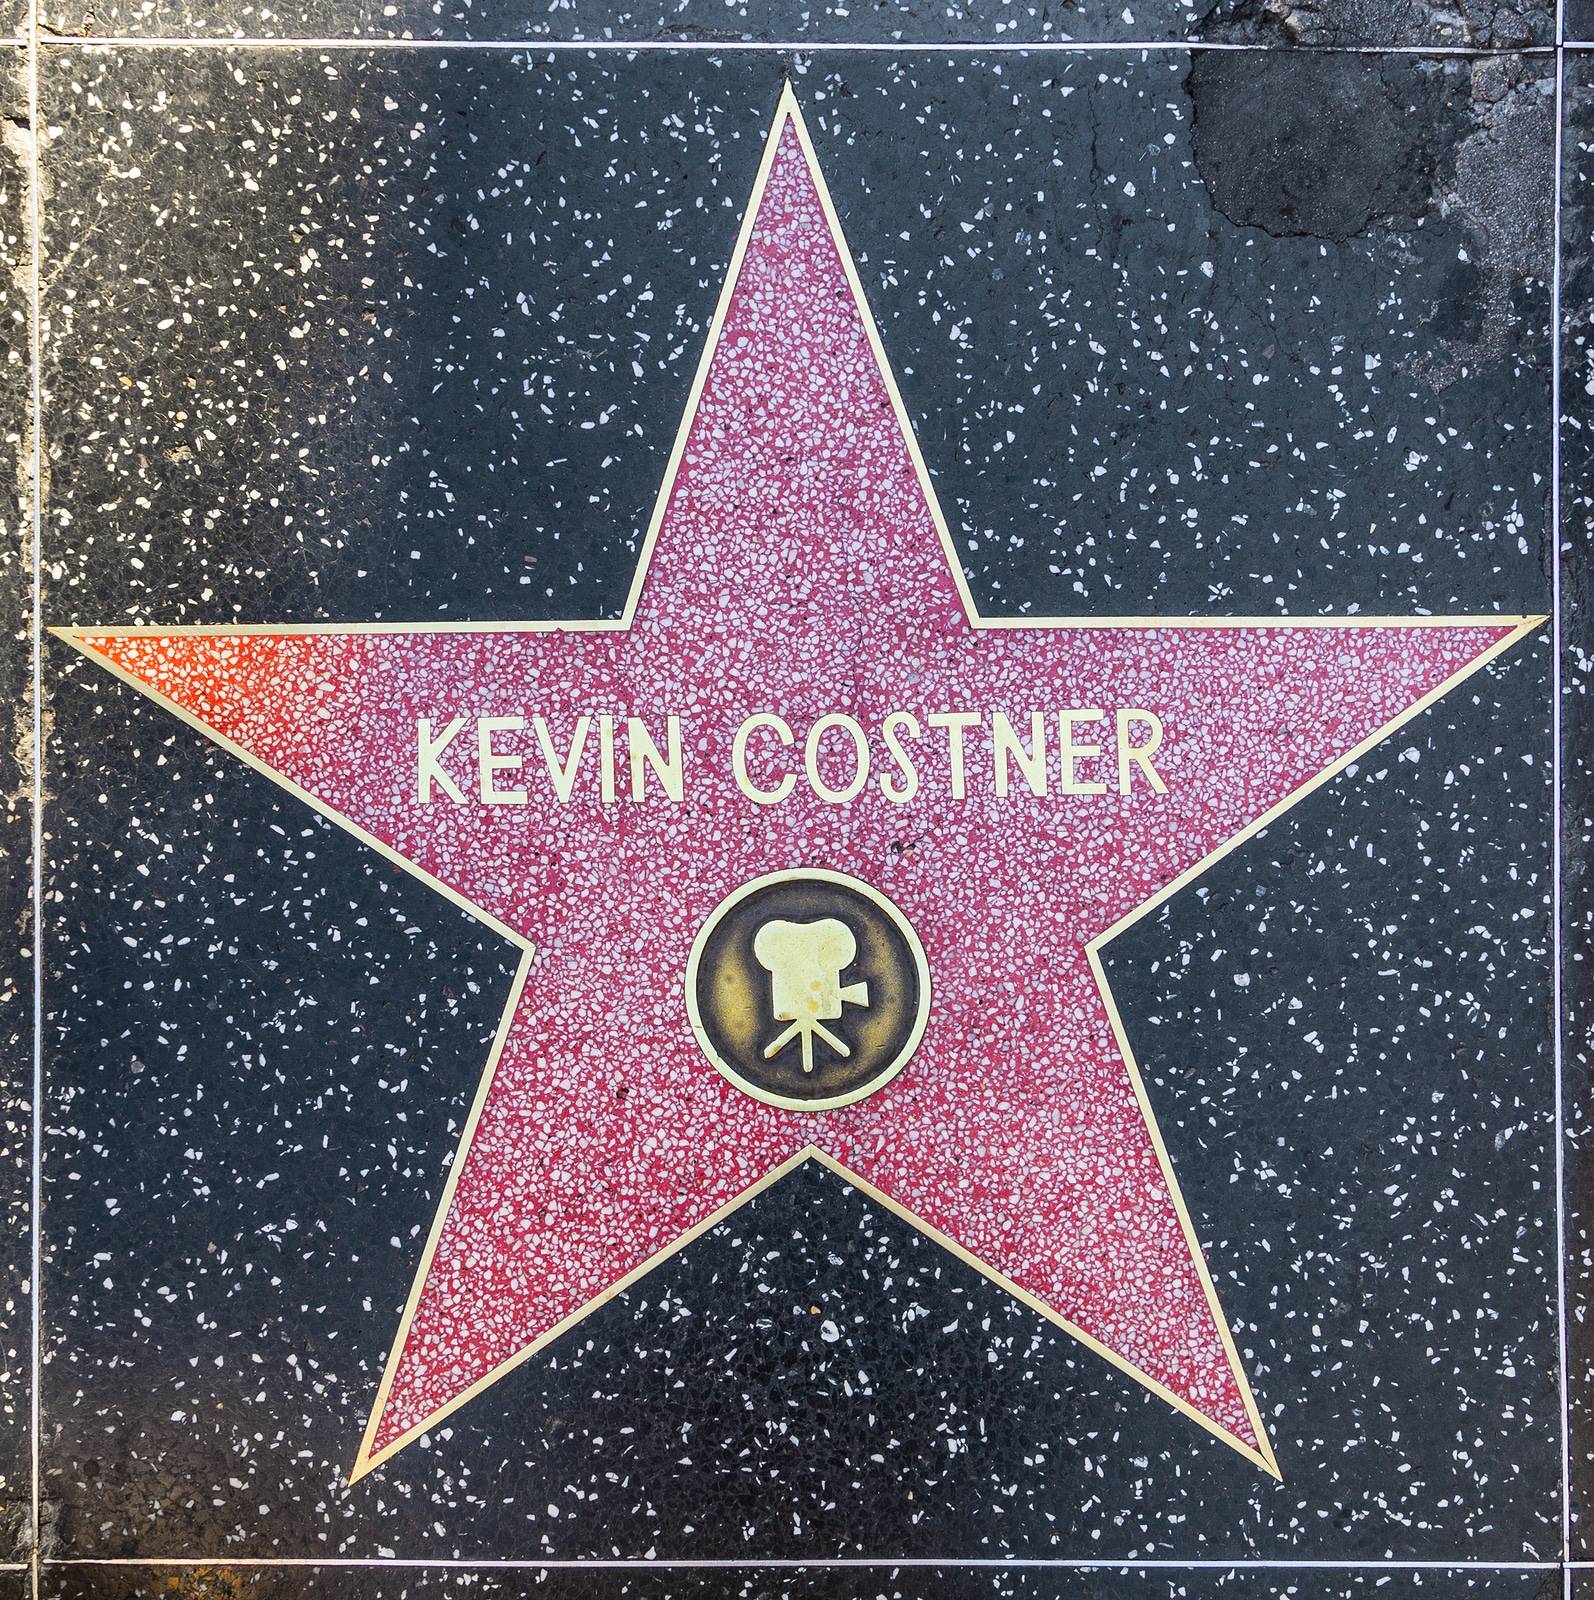 Kevin Costner's star